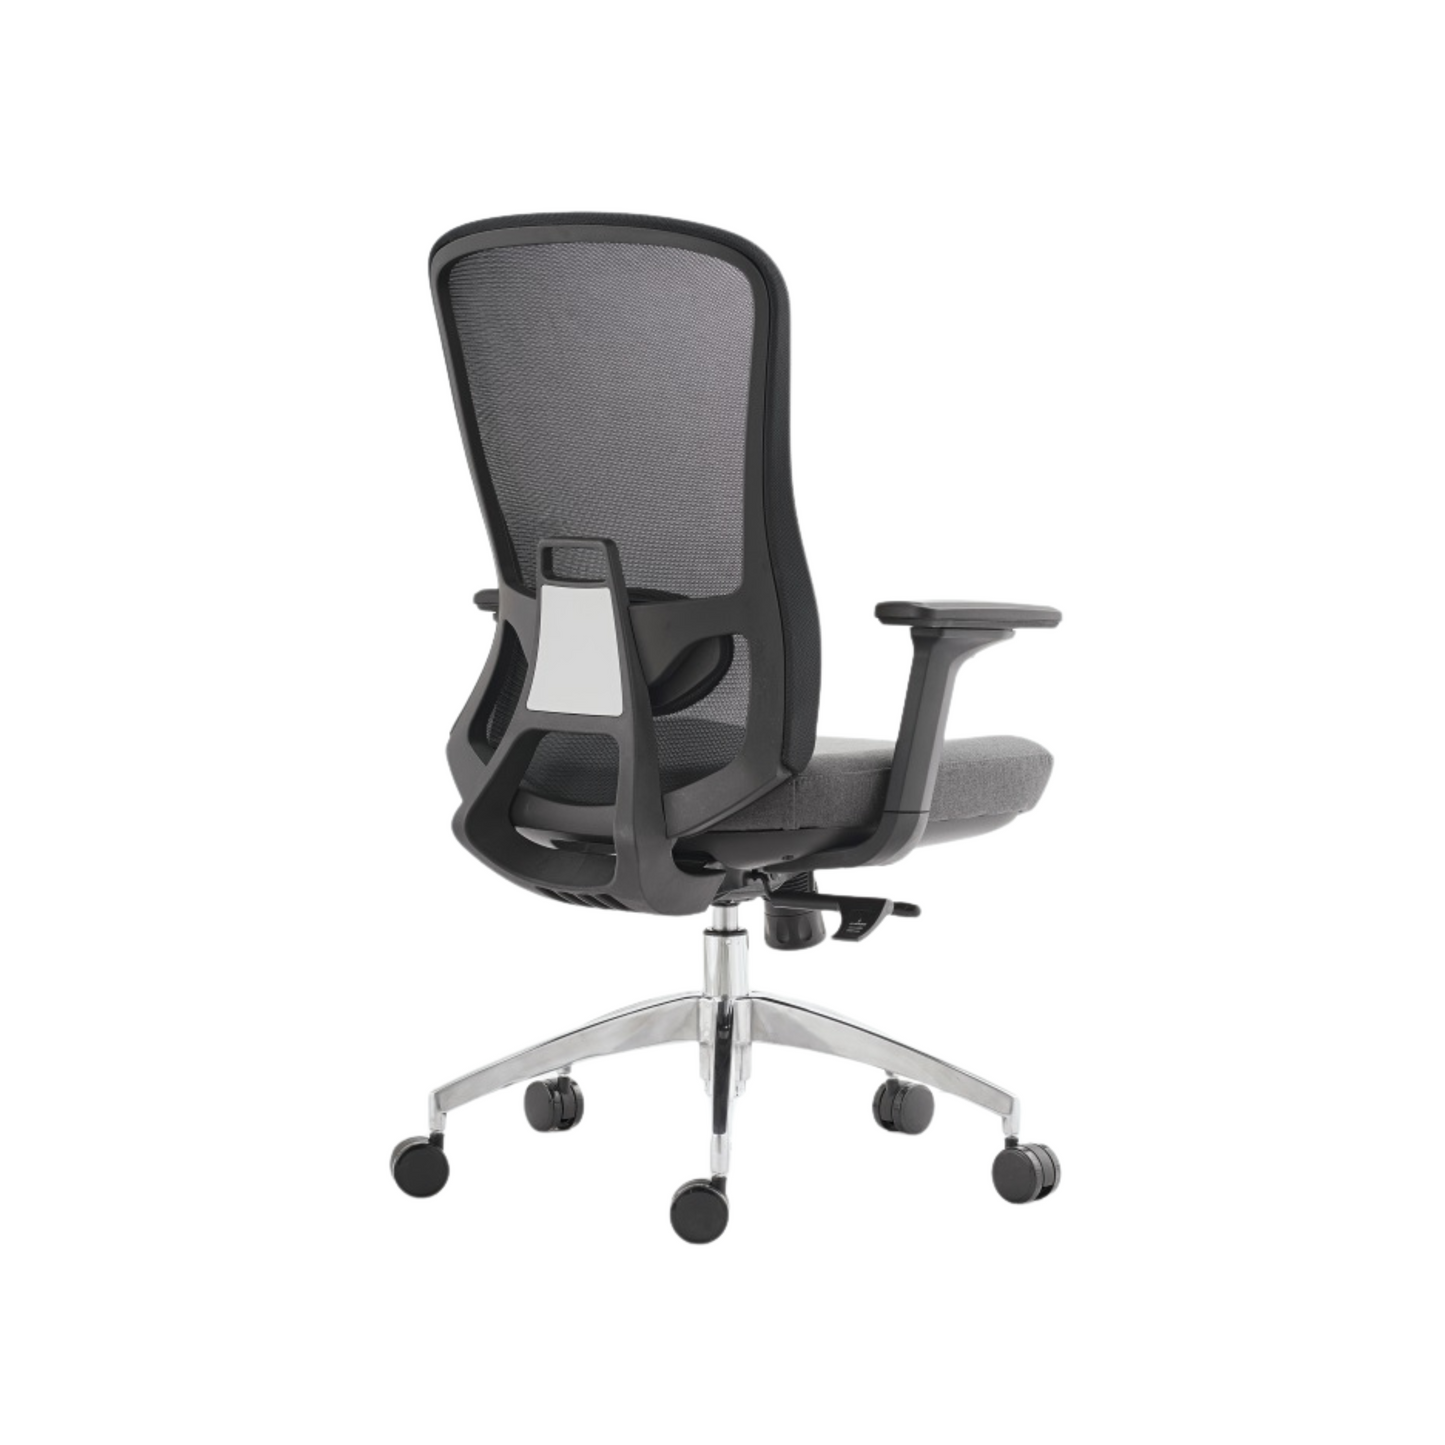 M33 Mid-back Ergonomic Chair